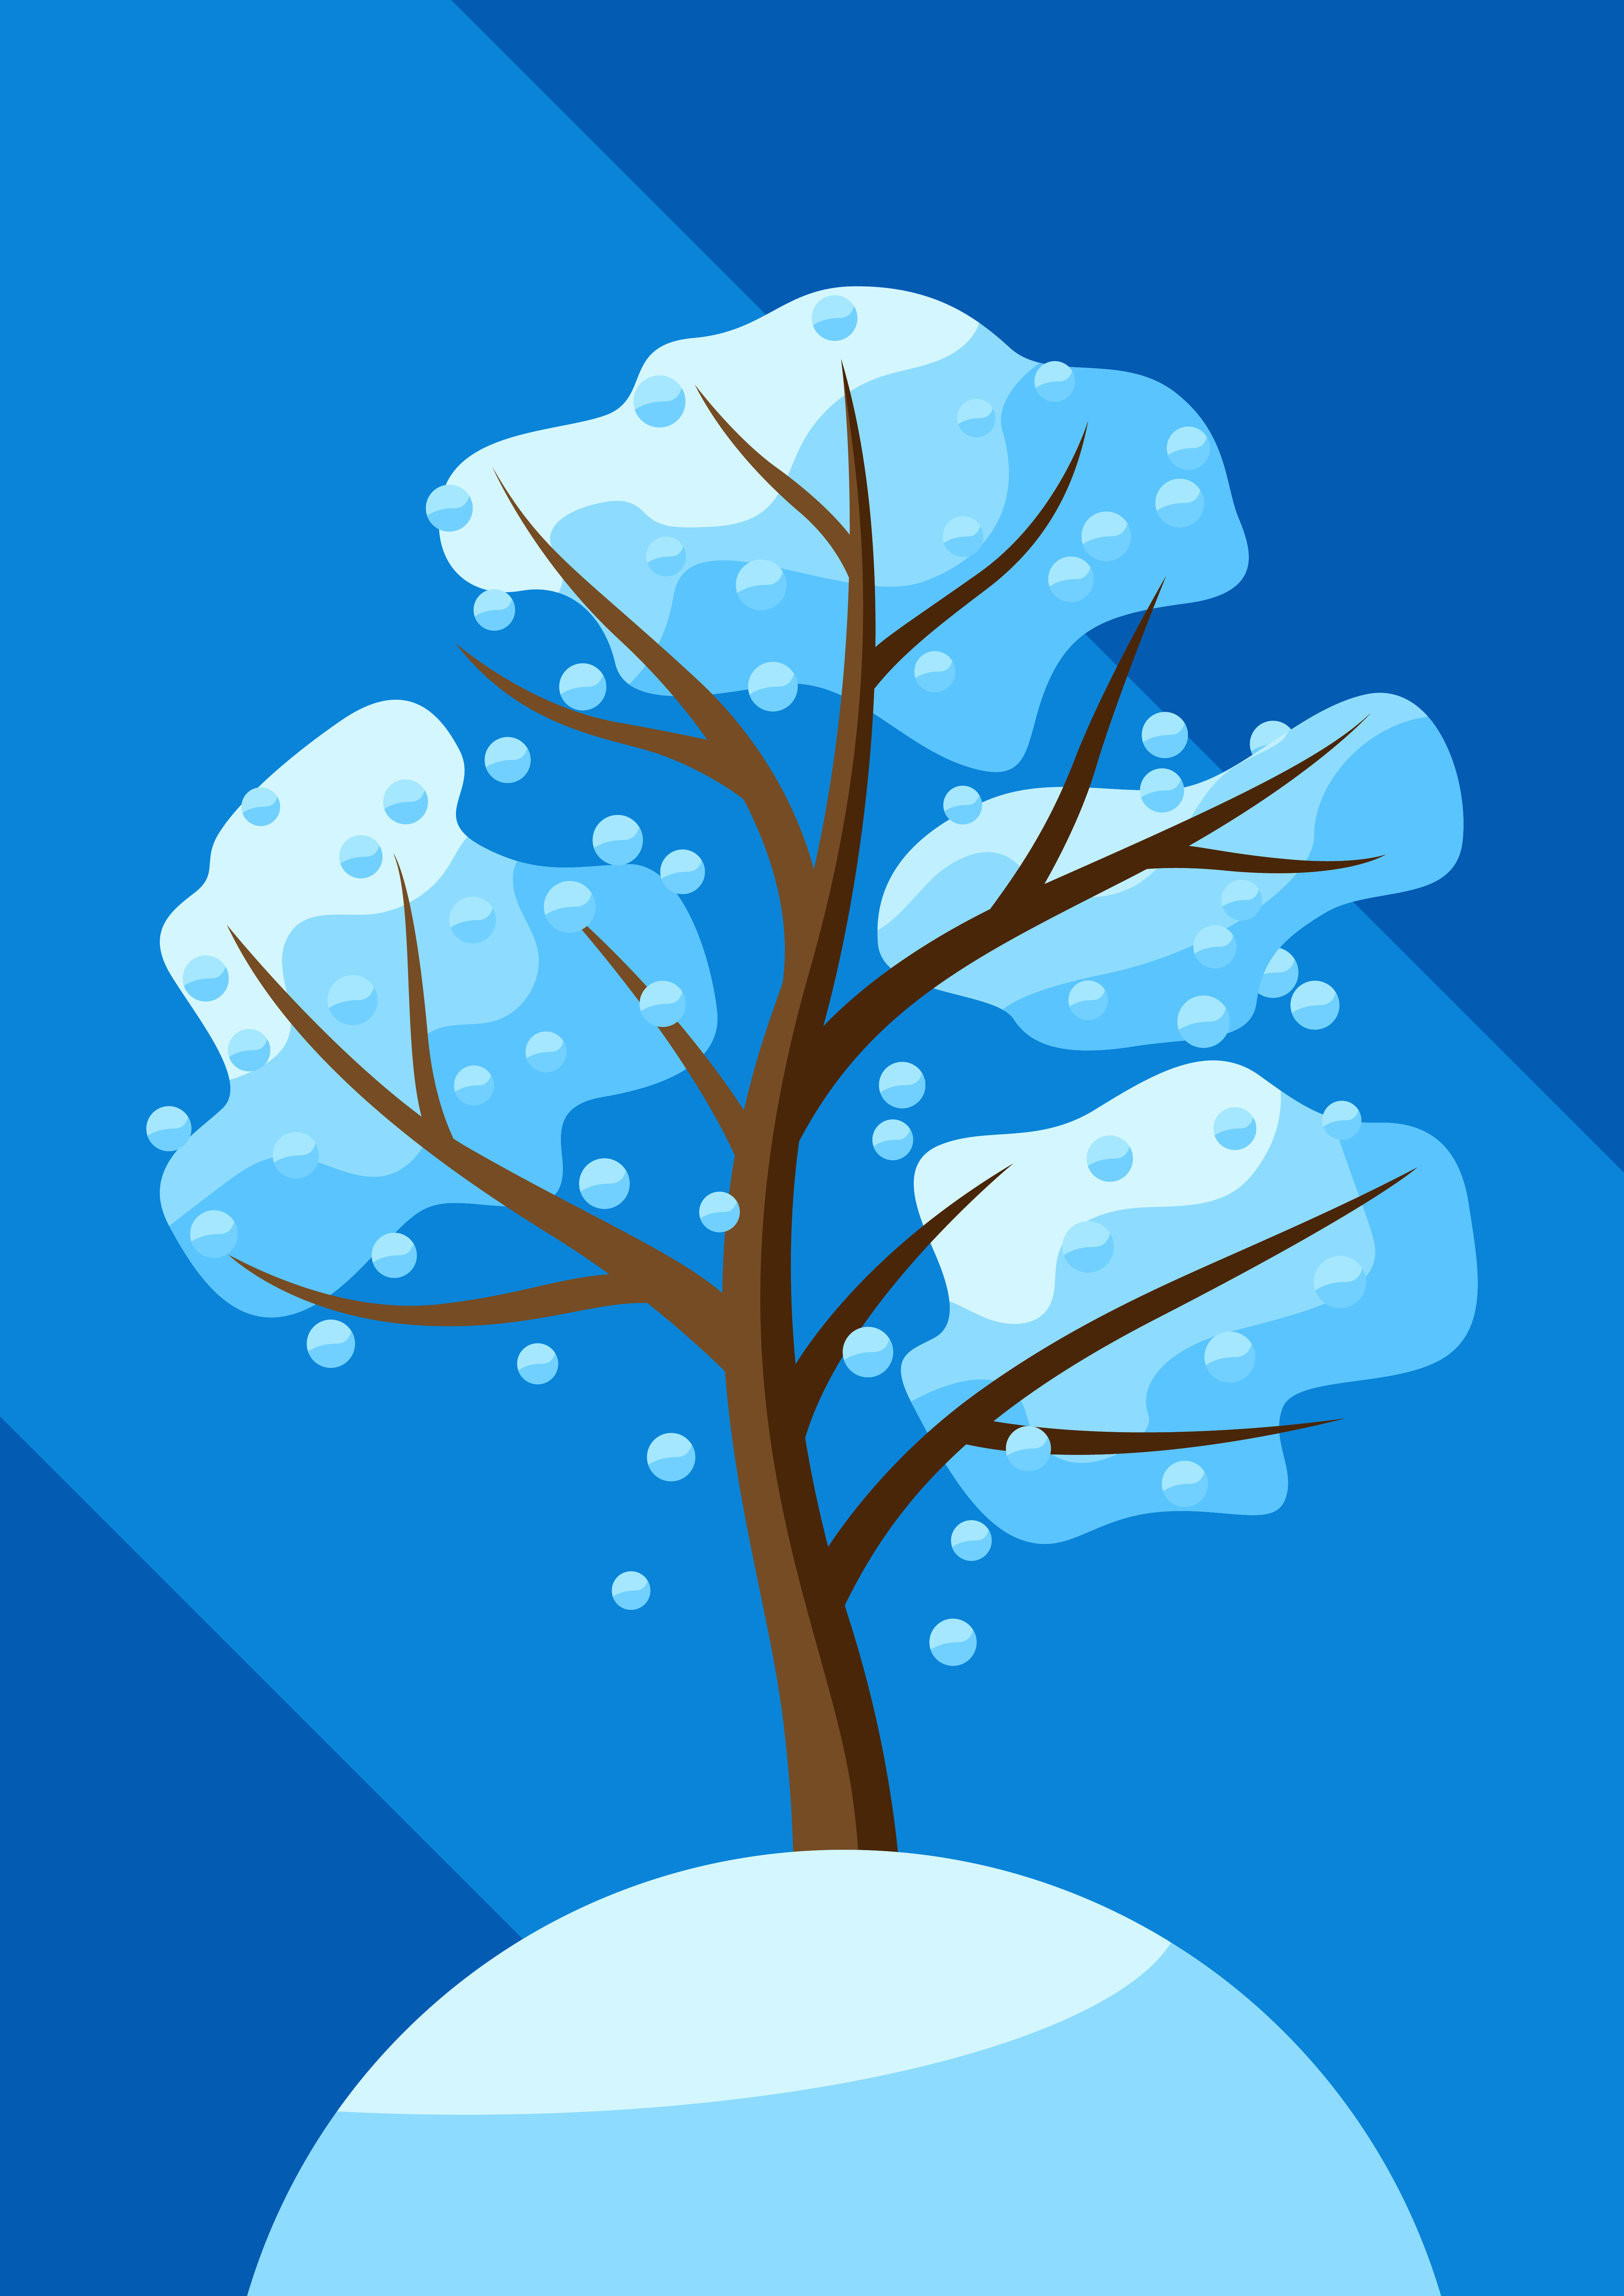 Winter tree with falling snow. Natural seasonal decorative illustration.. Winter tree with falling snow.